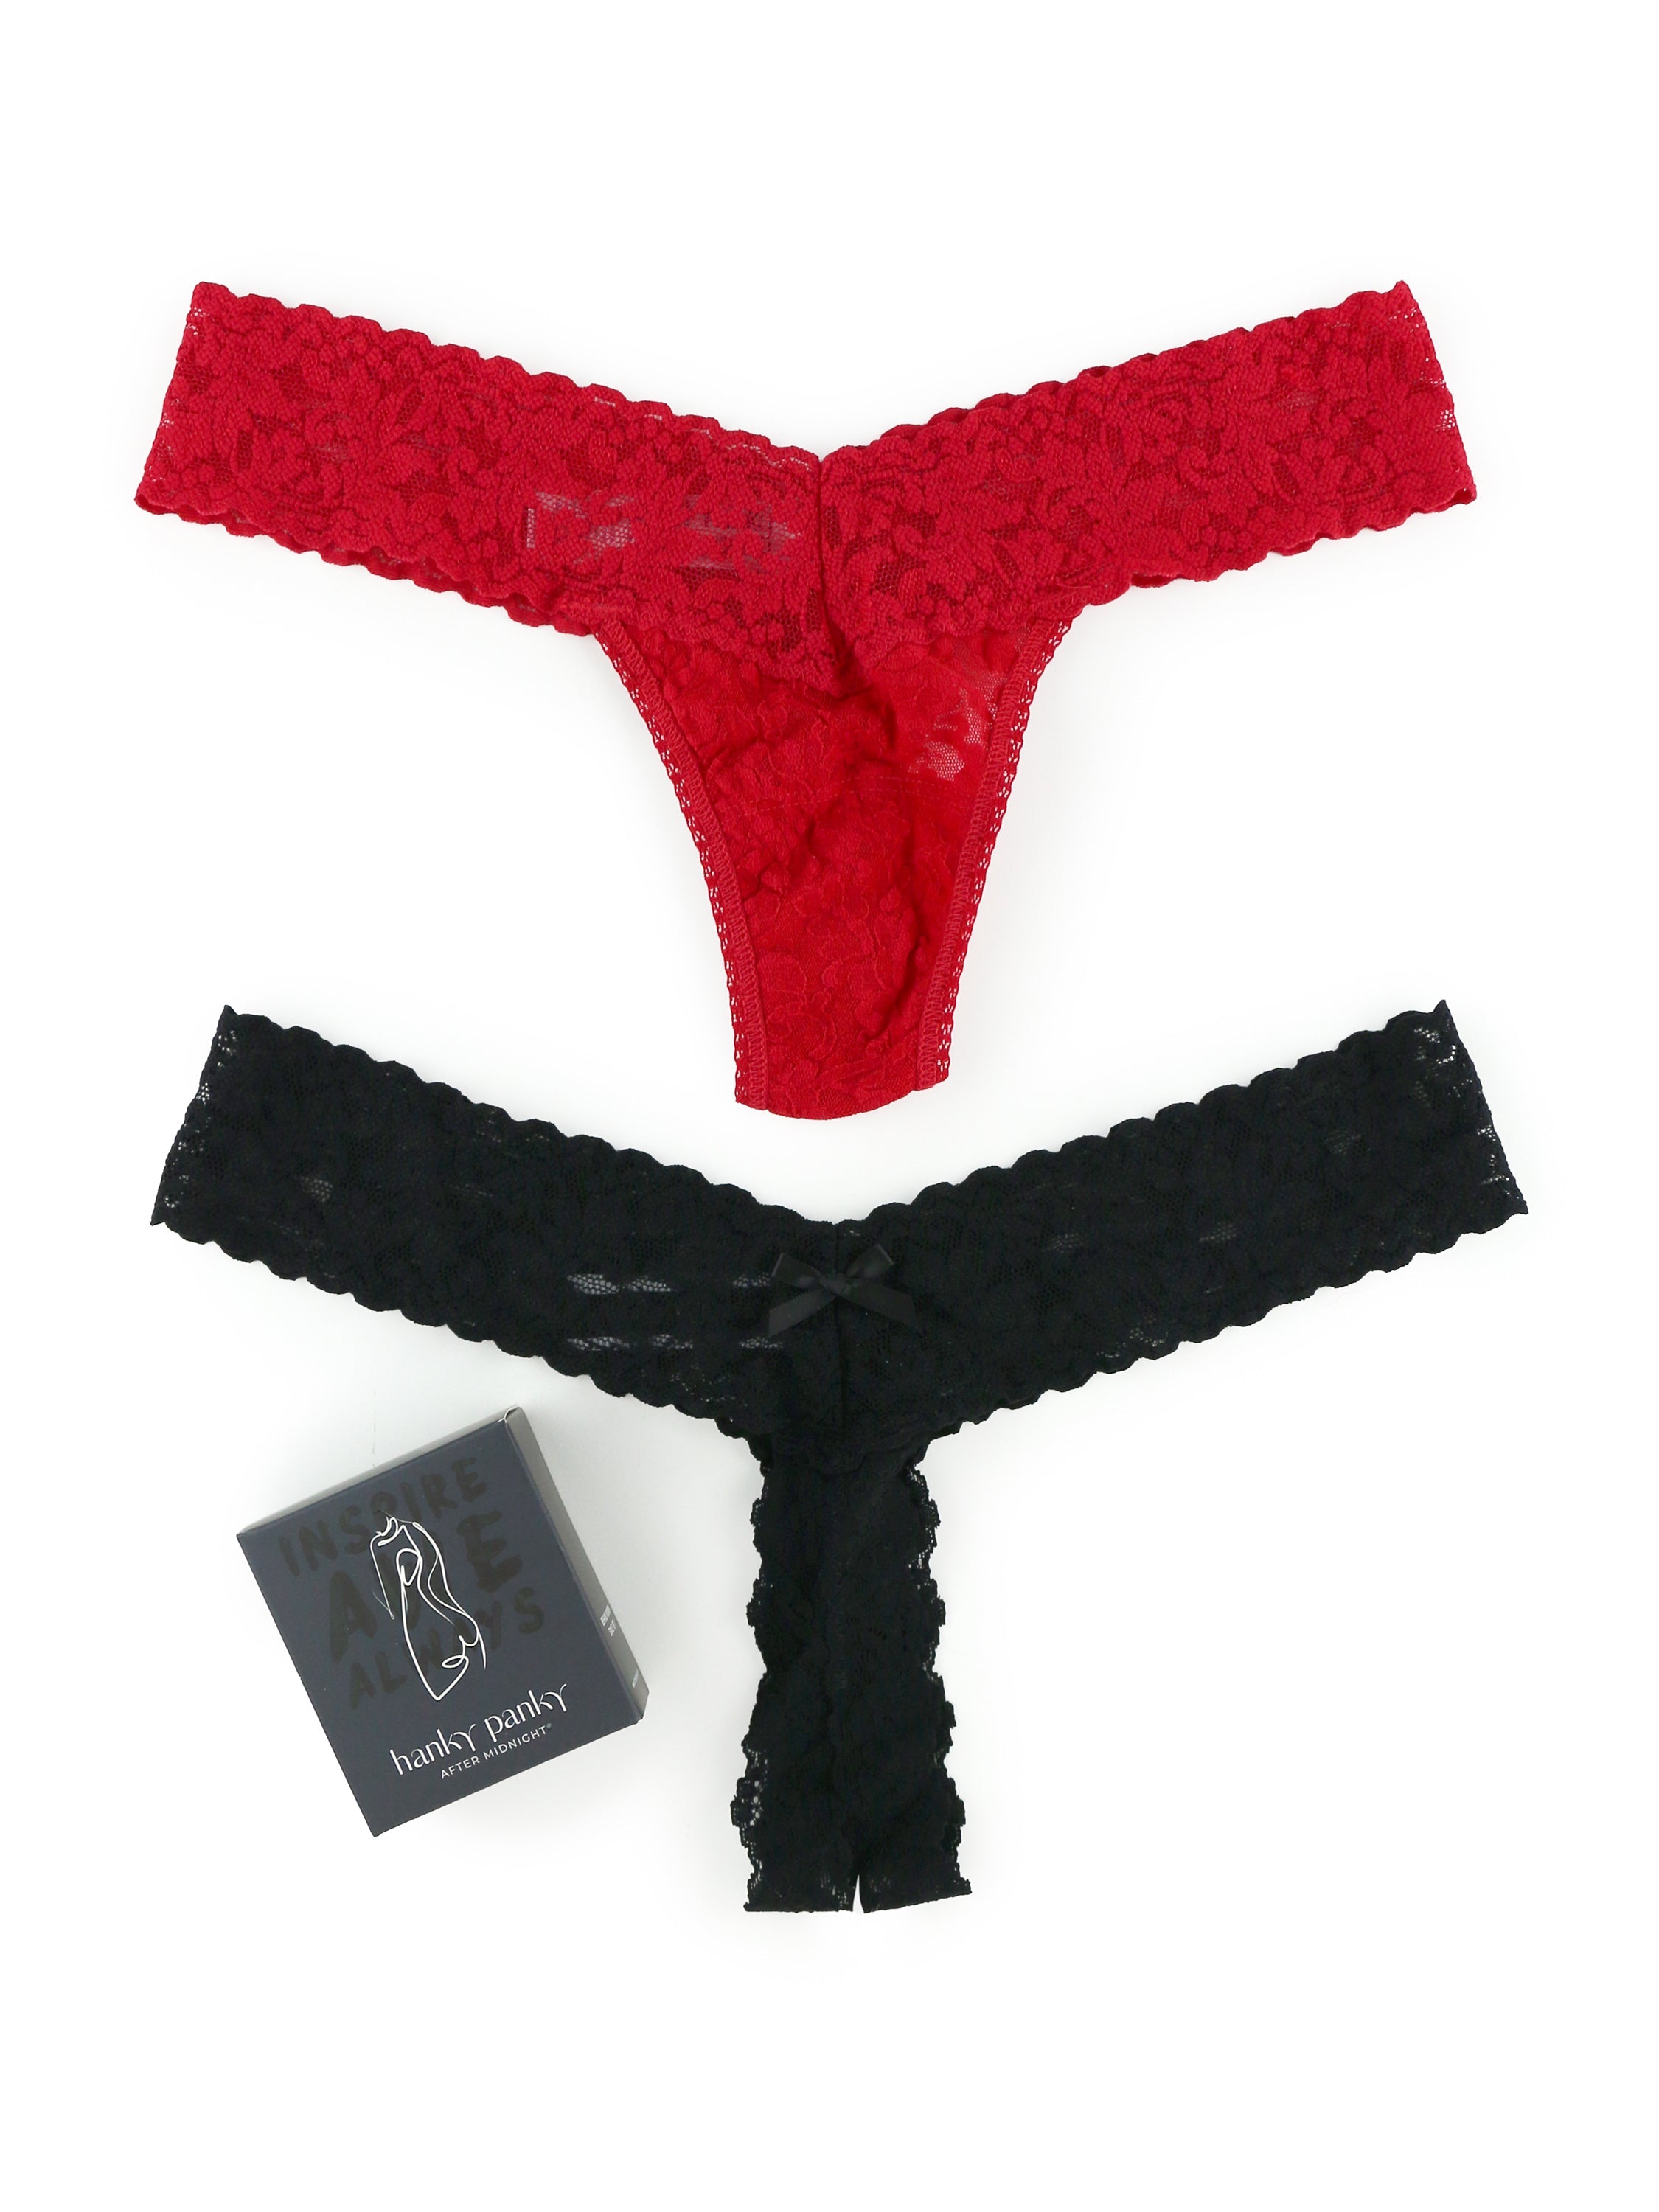 Buy Black Panties for Women by V-STAR Online